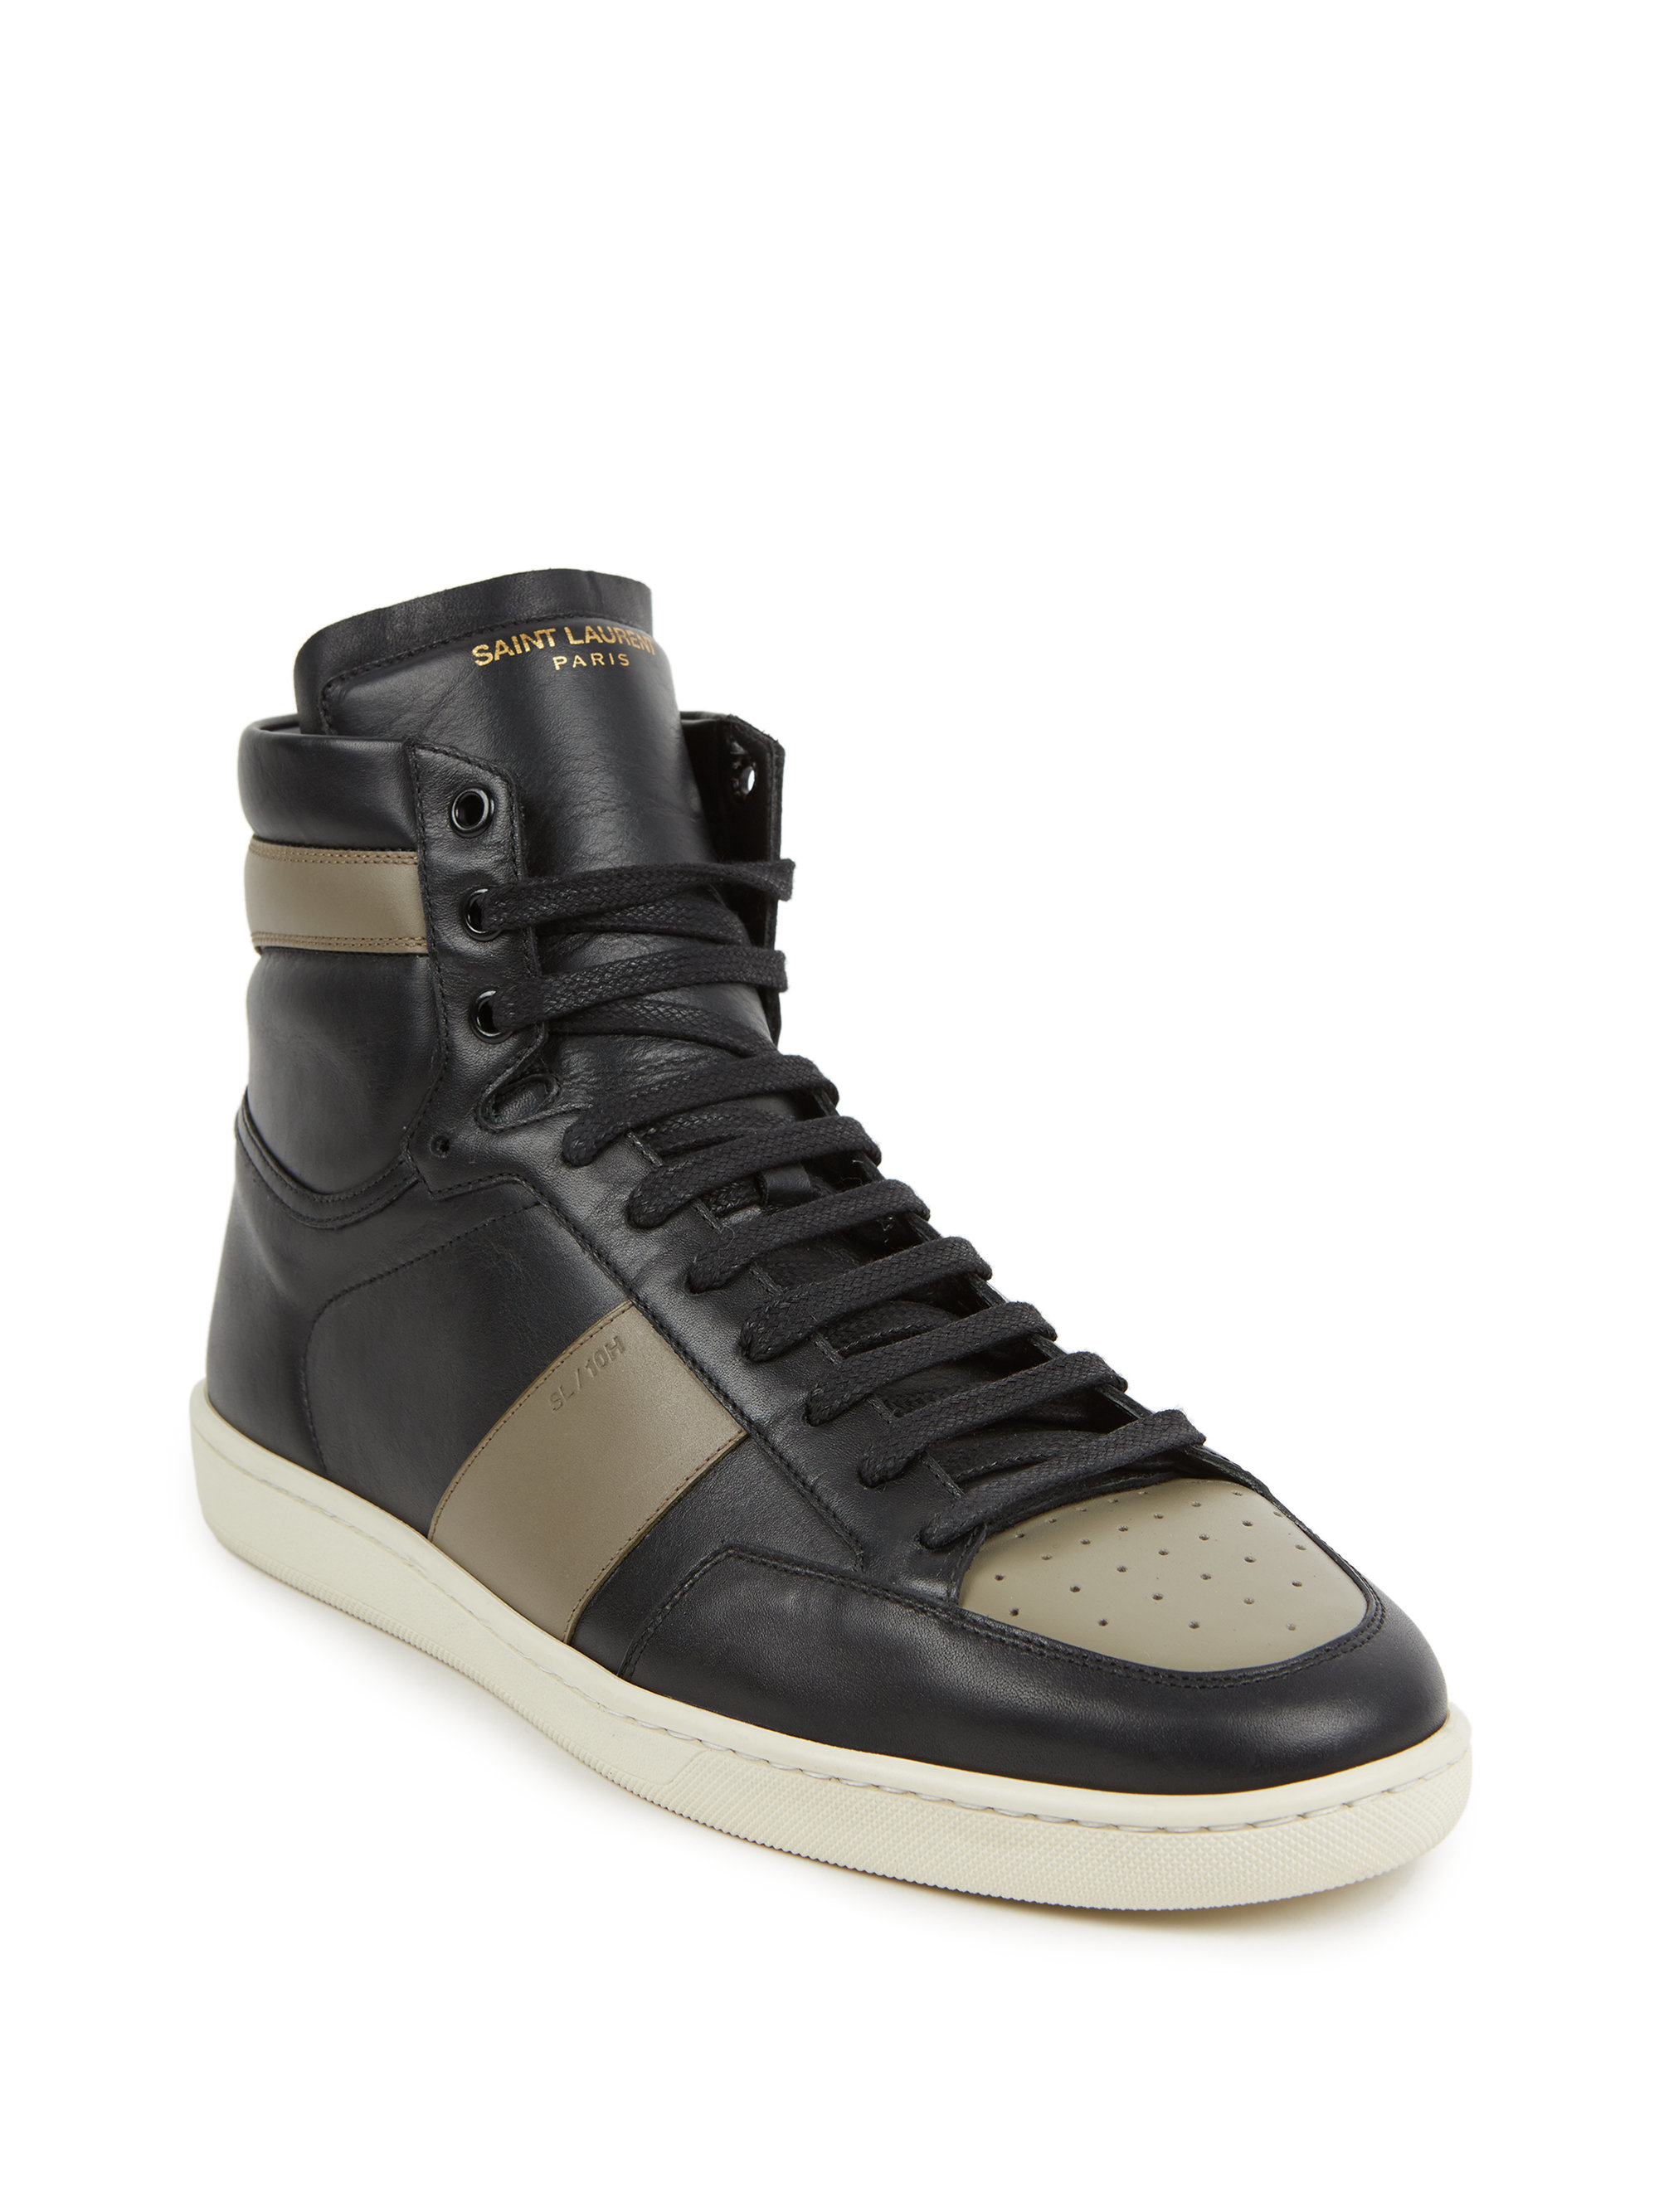 Saint laurent Colorblock Leather High-top Sneakers in Black for Men | Lyst